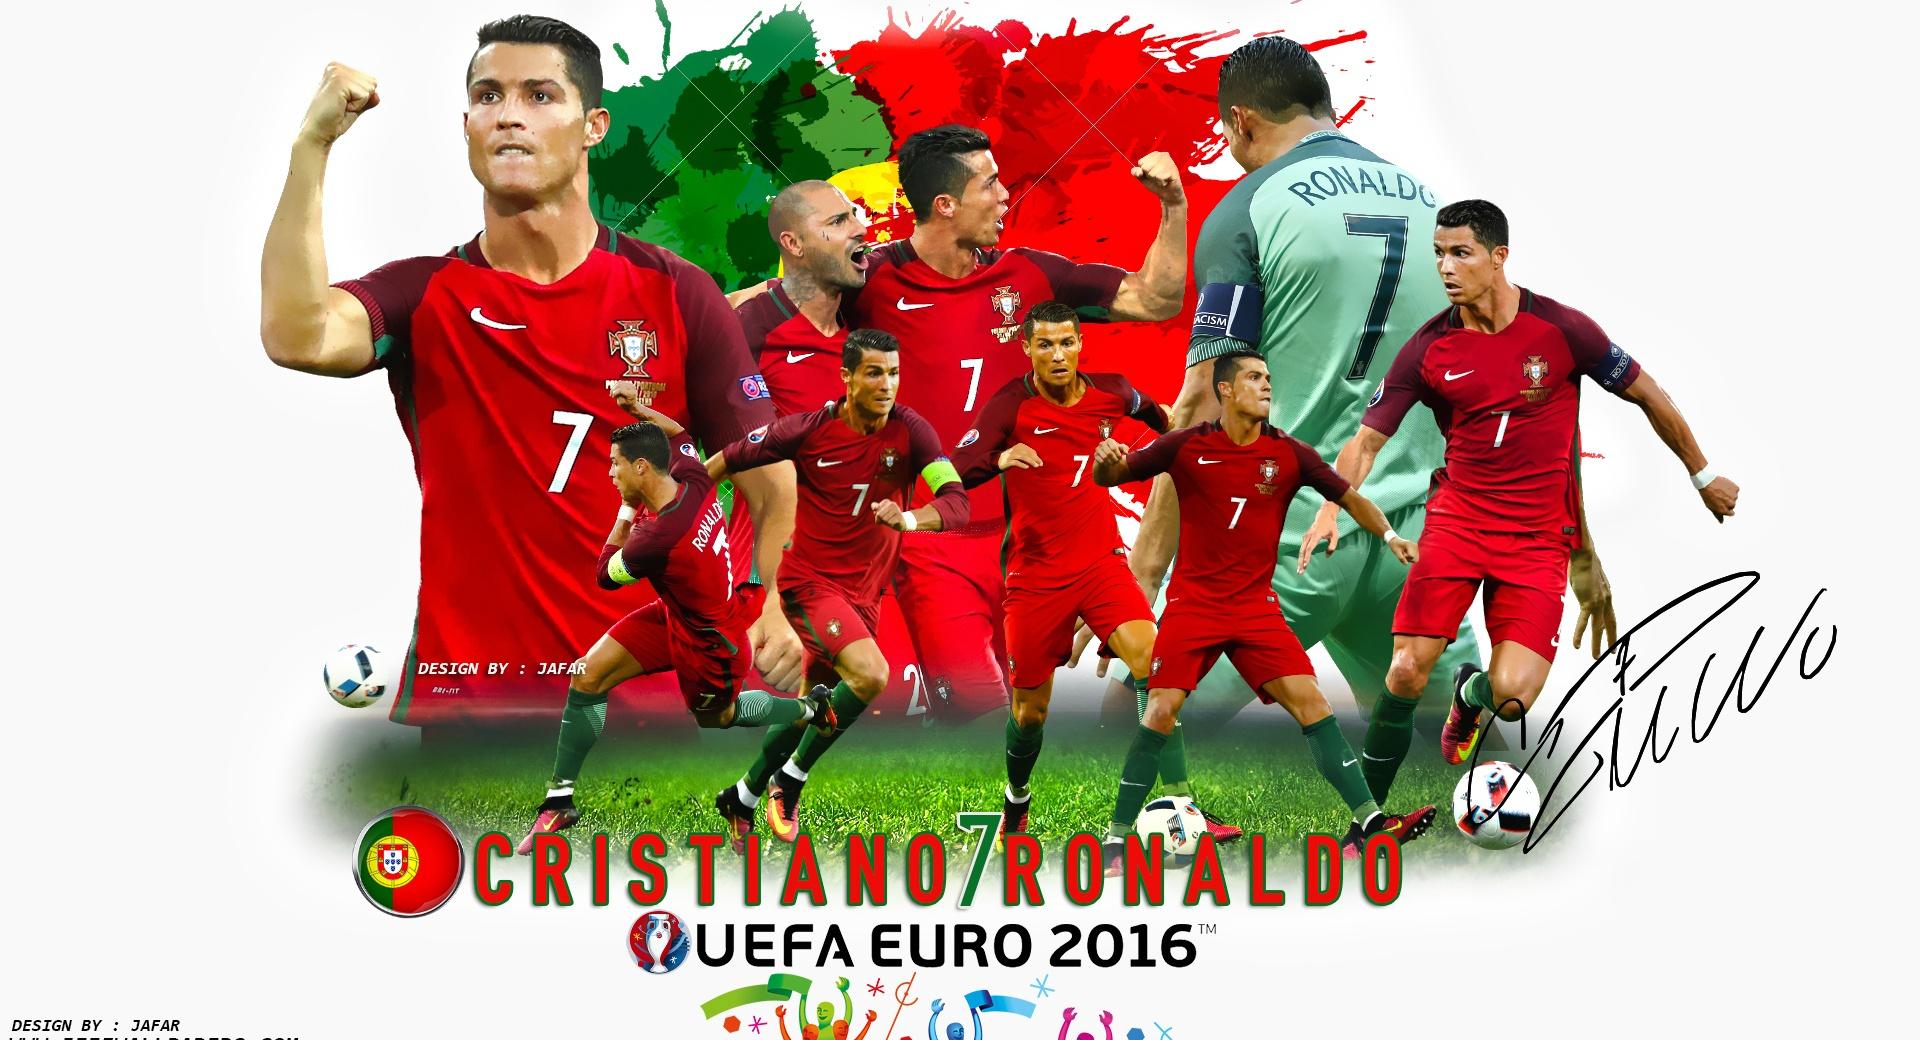 CRISTIANO RONALDO EURO 2016 at 1024 x 1024 iPad size wallpapers HD quality